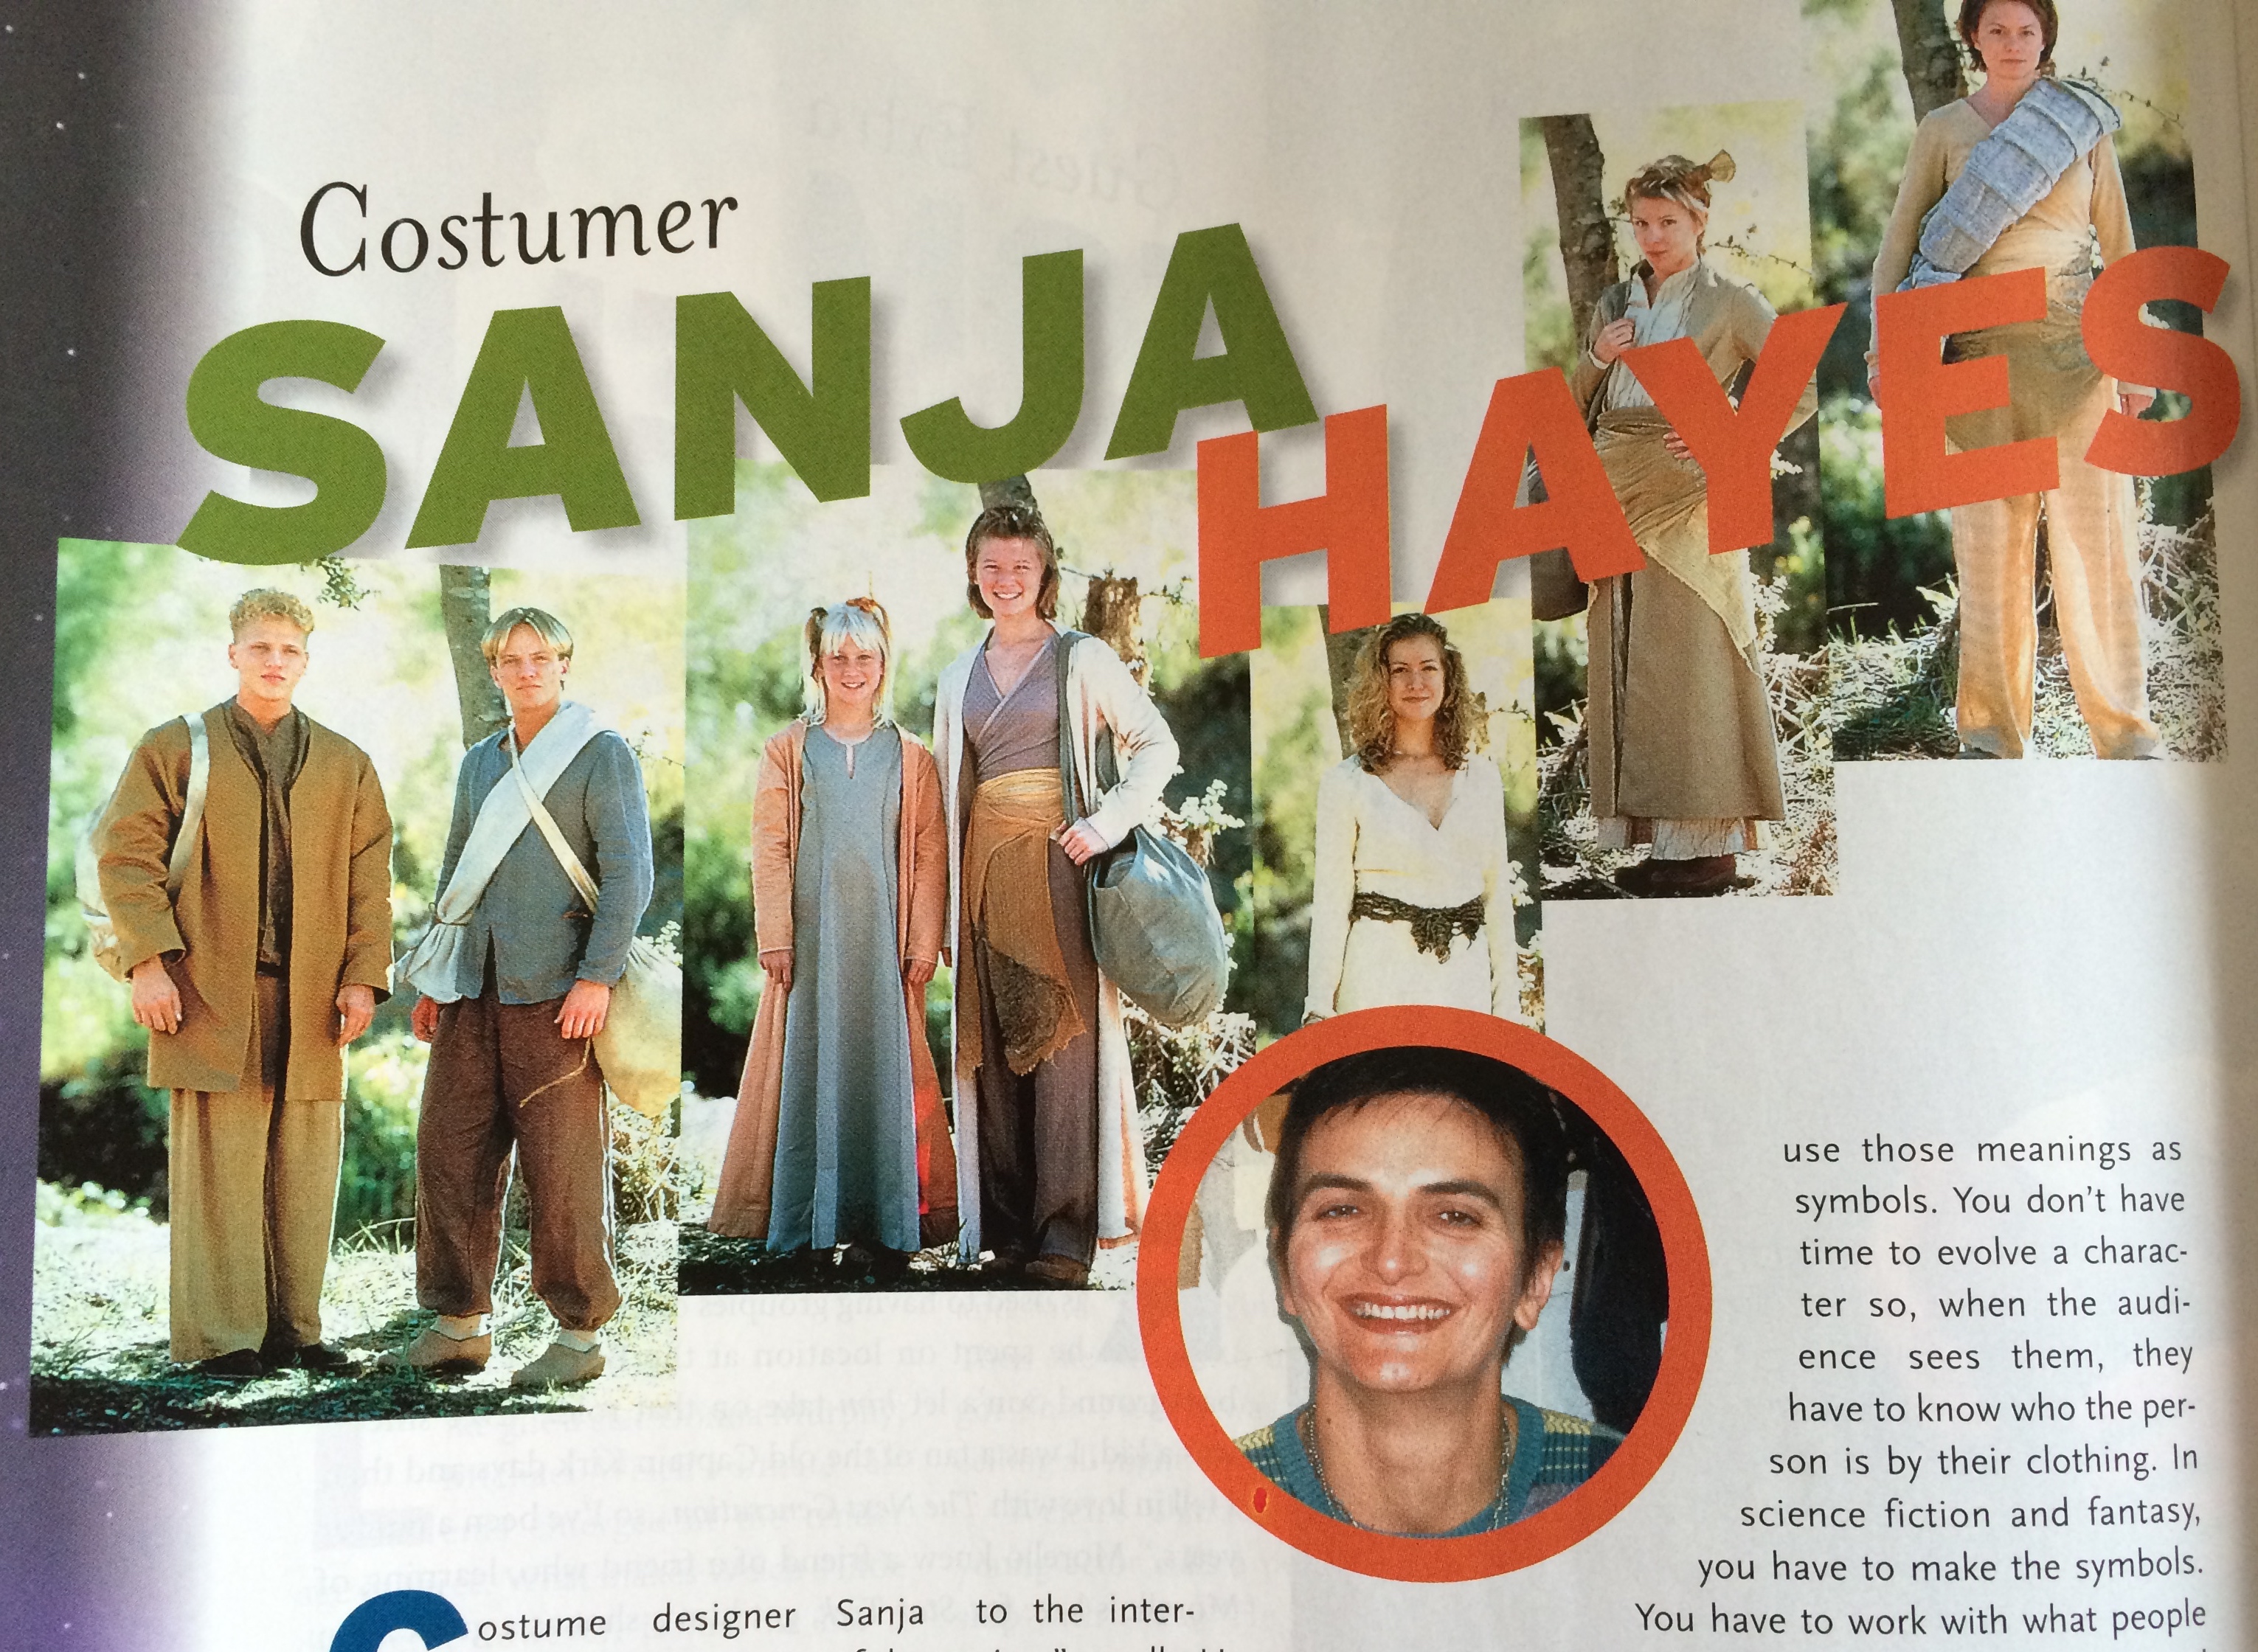 Magazine headline "Costumer Sanja Hayes"